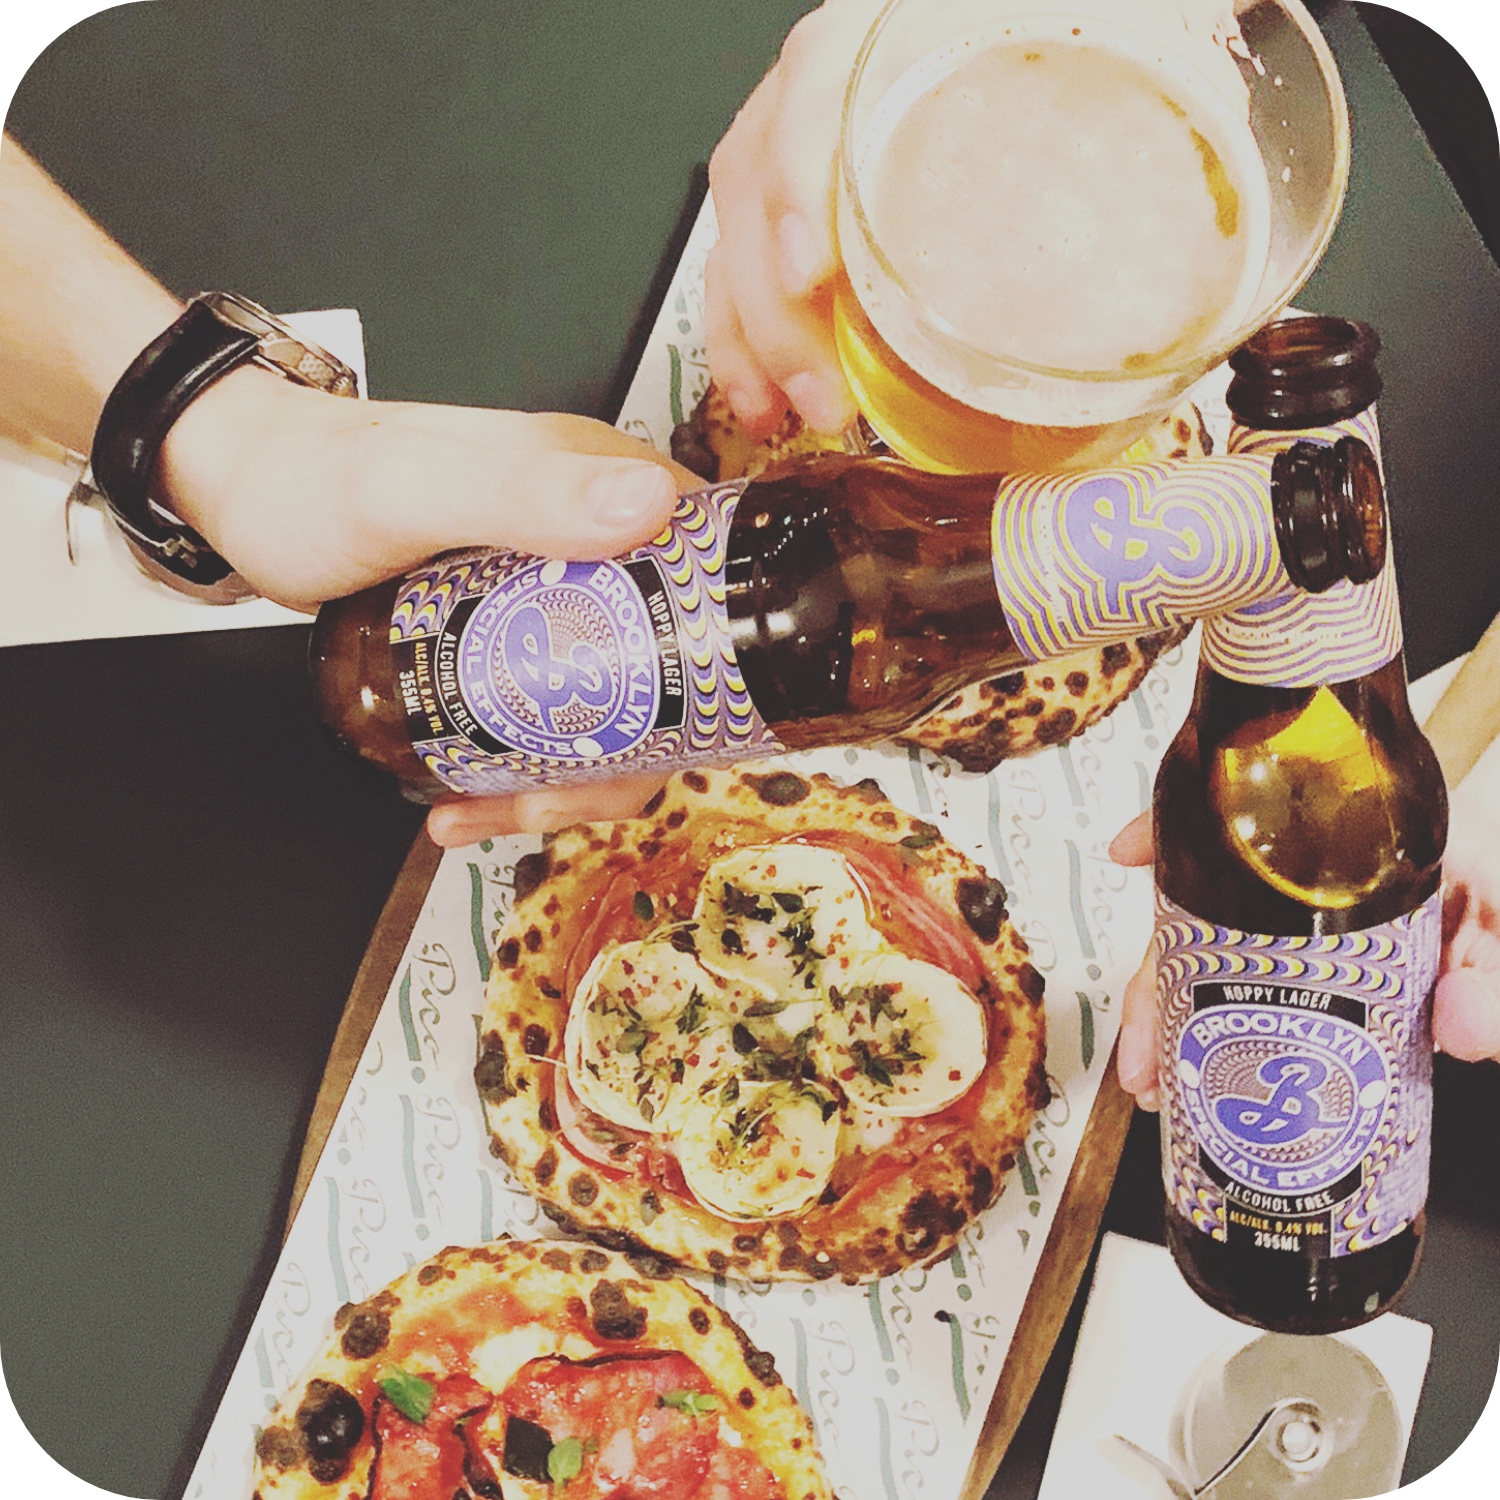 mad og alkoholfri øl special effetcs brooklyn brewery og pizza